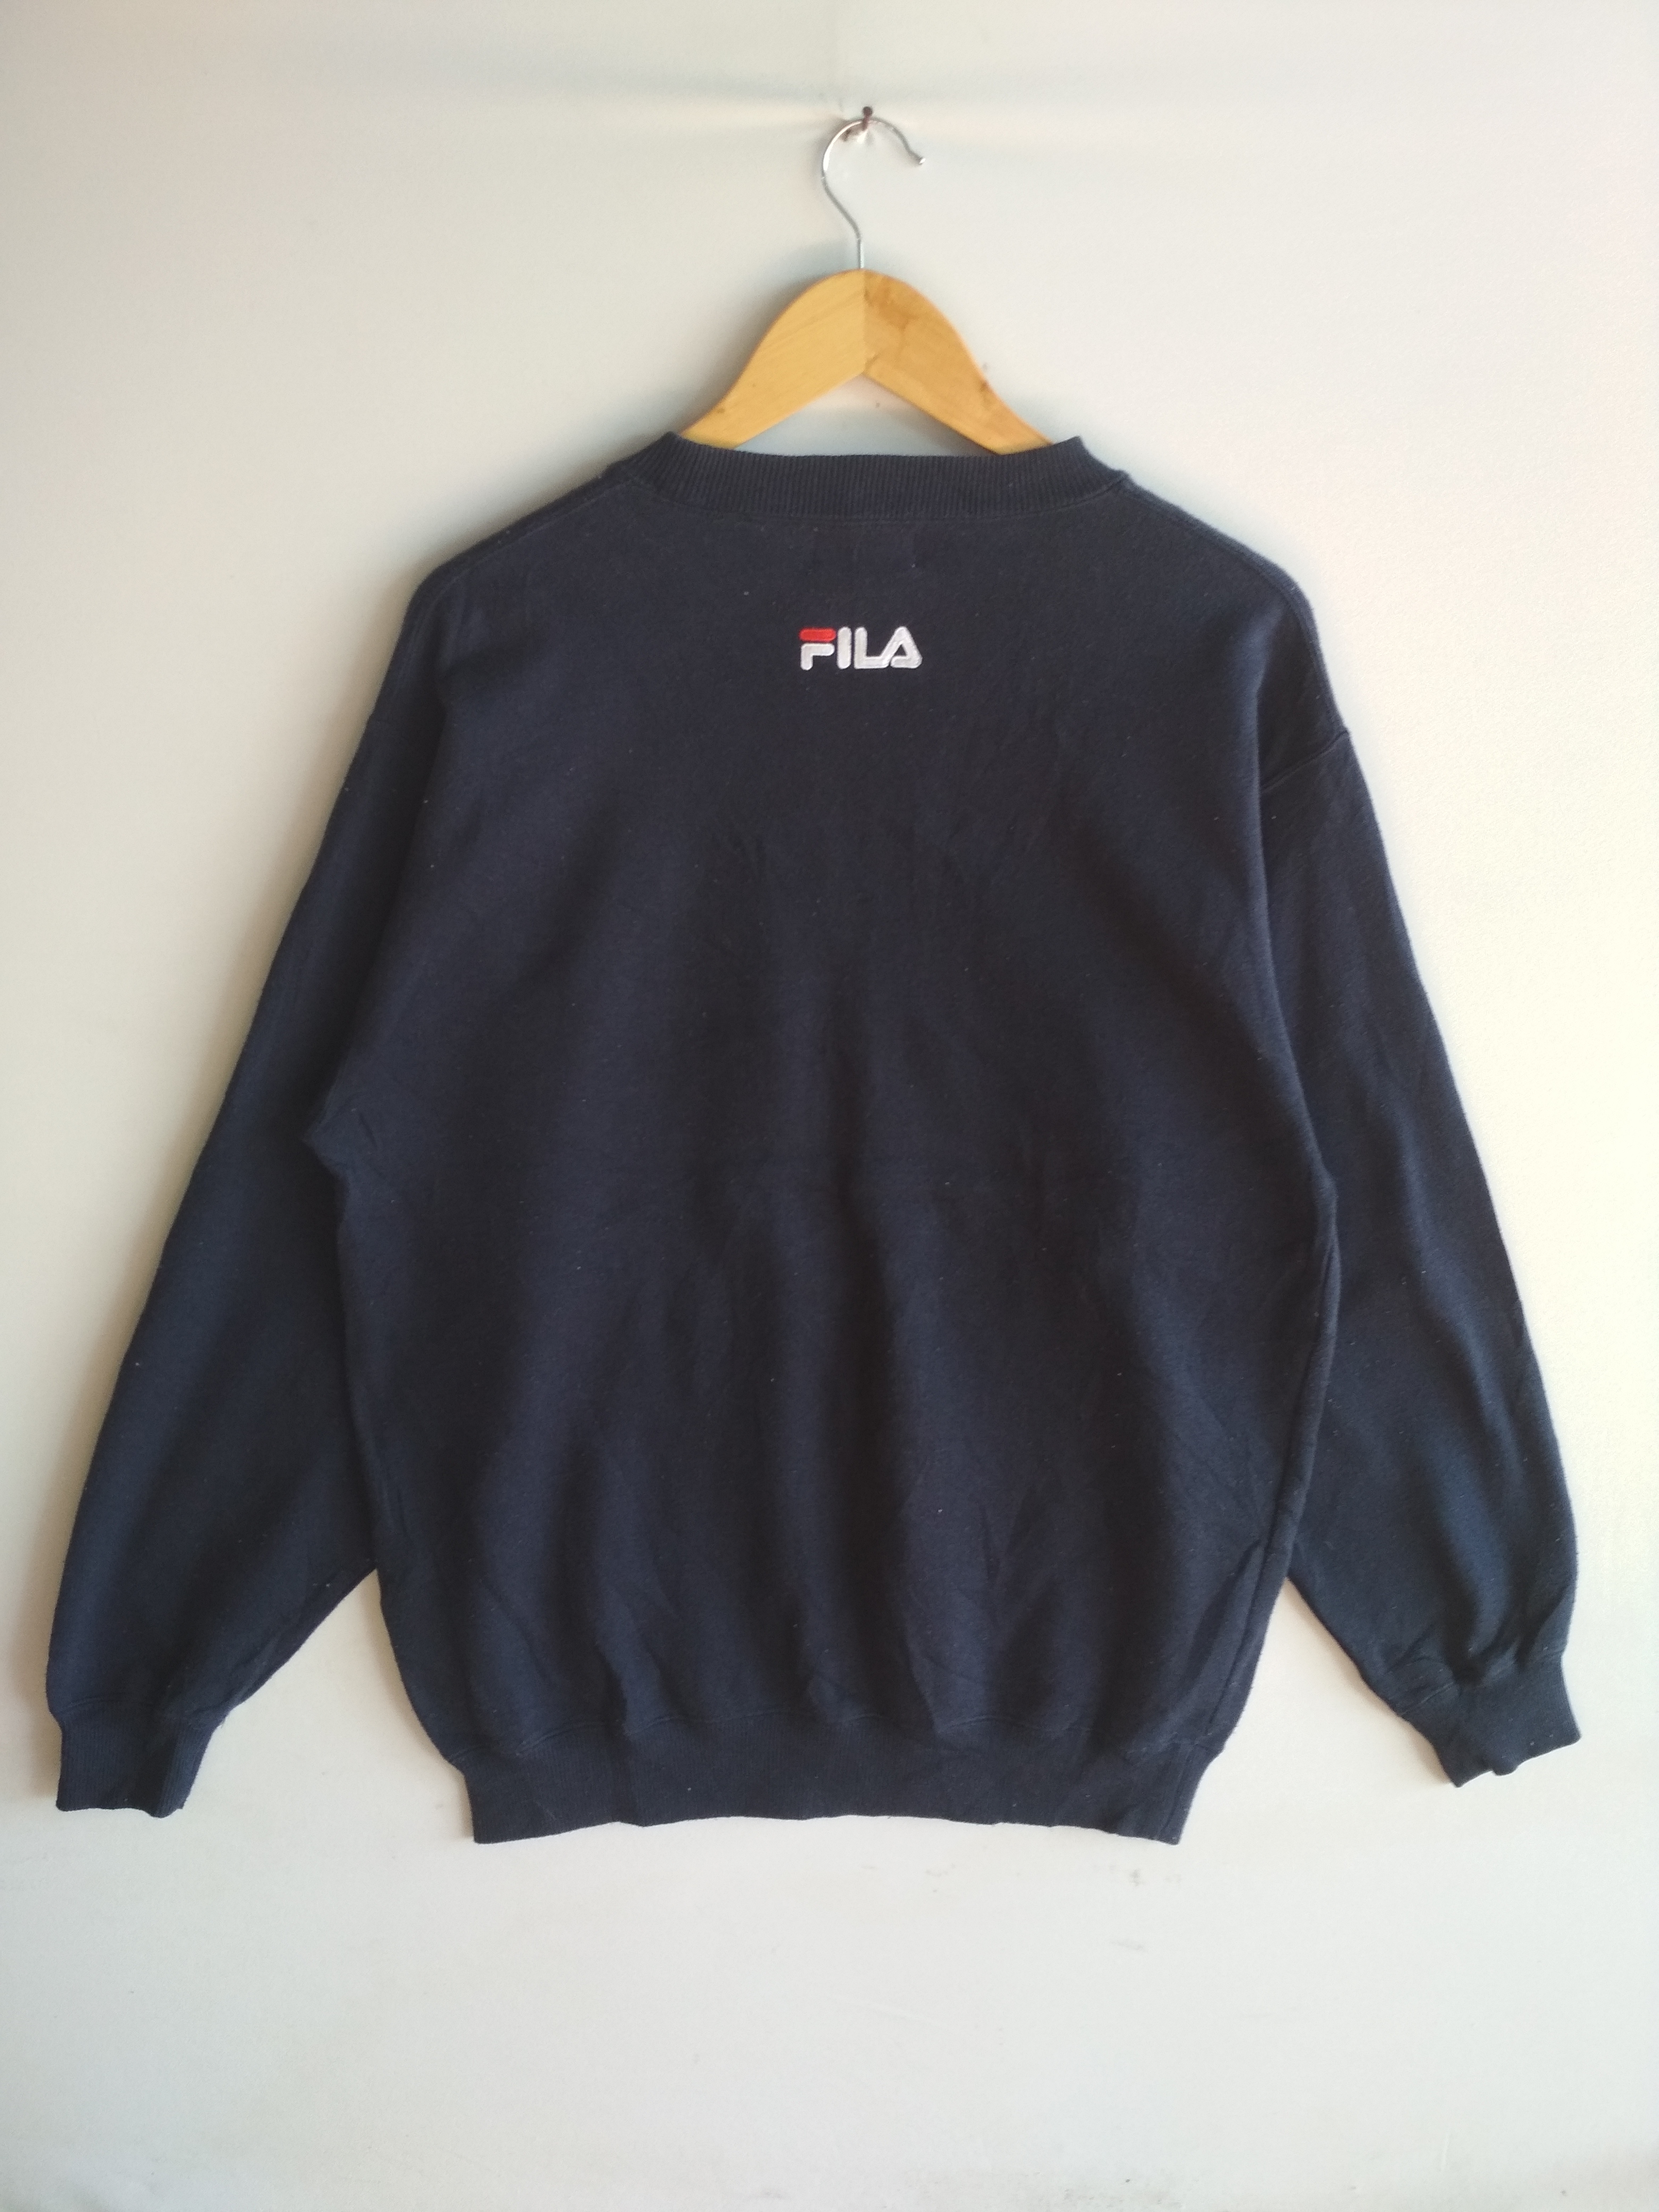 Fila - FILA Big Logo Embroidery Front and Back Sweatshirt - 5